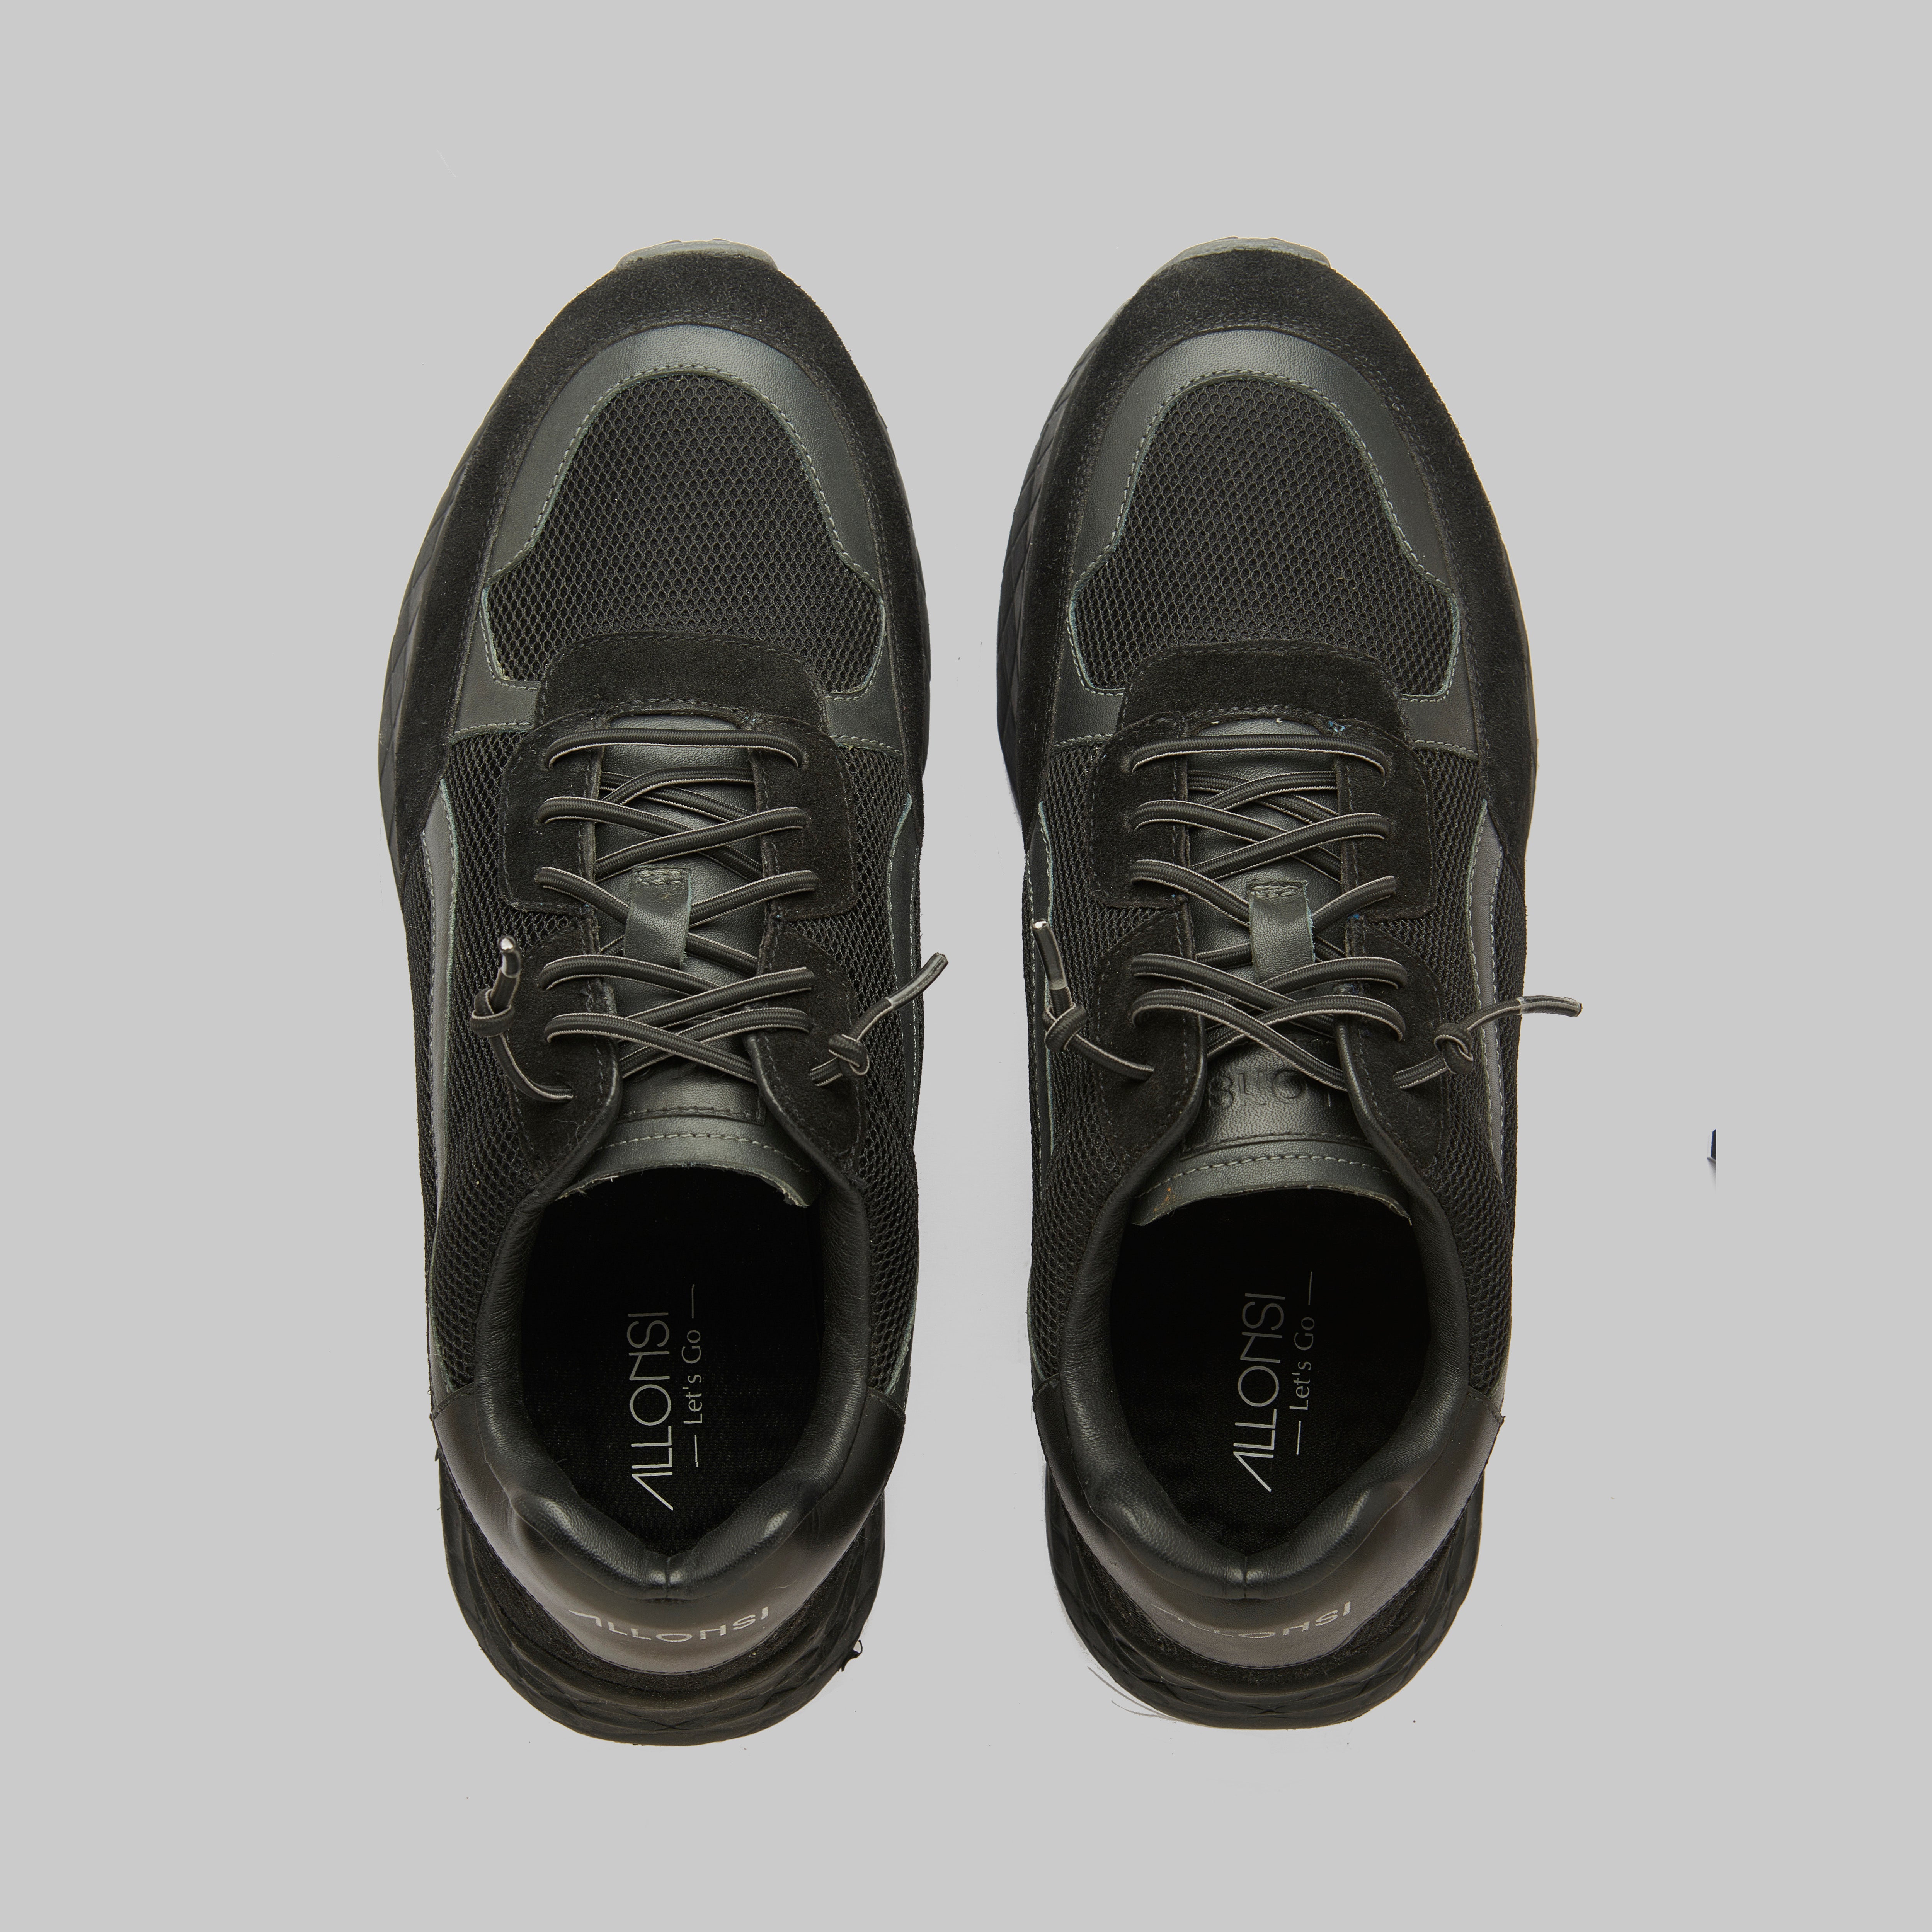 Comodo Men's Leather Sneakers